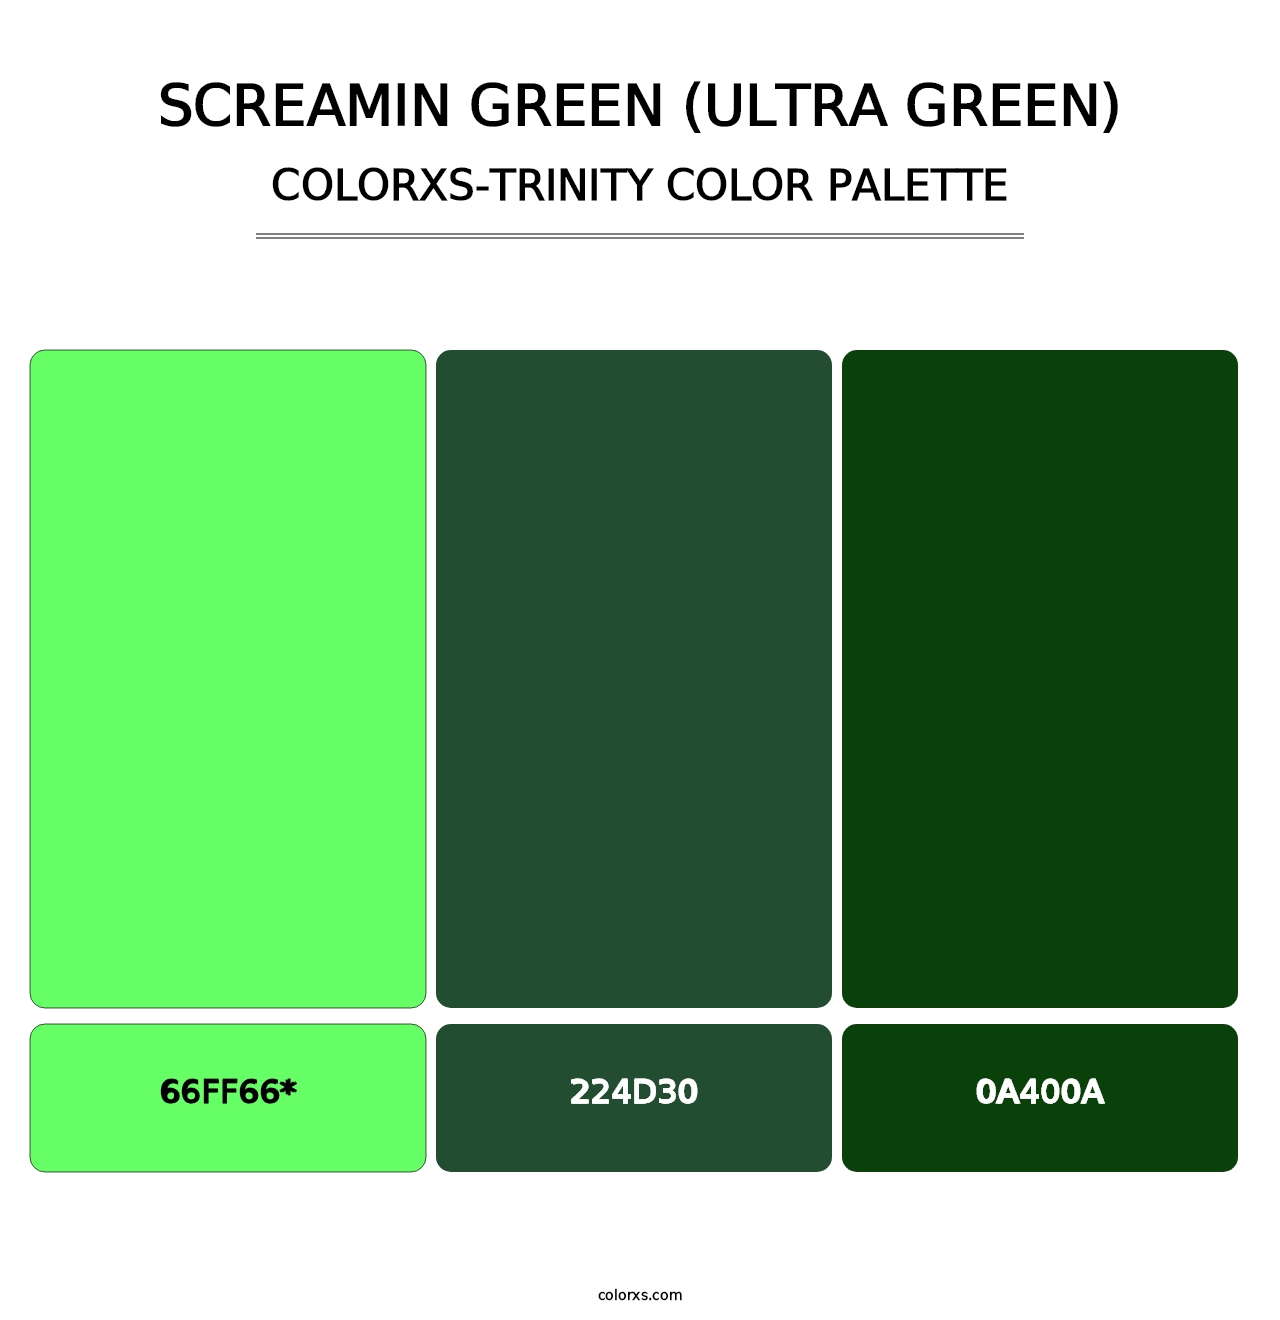 Screamin Green (Ultra Green) - Colorxs Trinity Palette